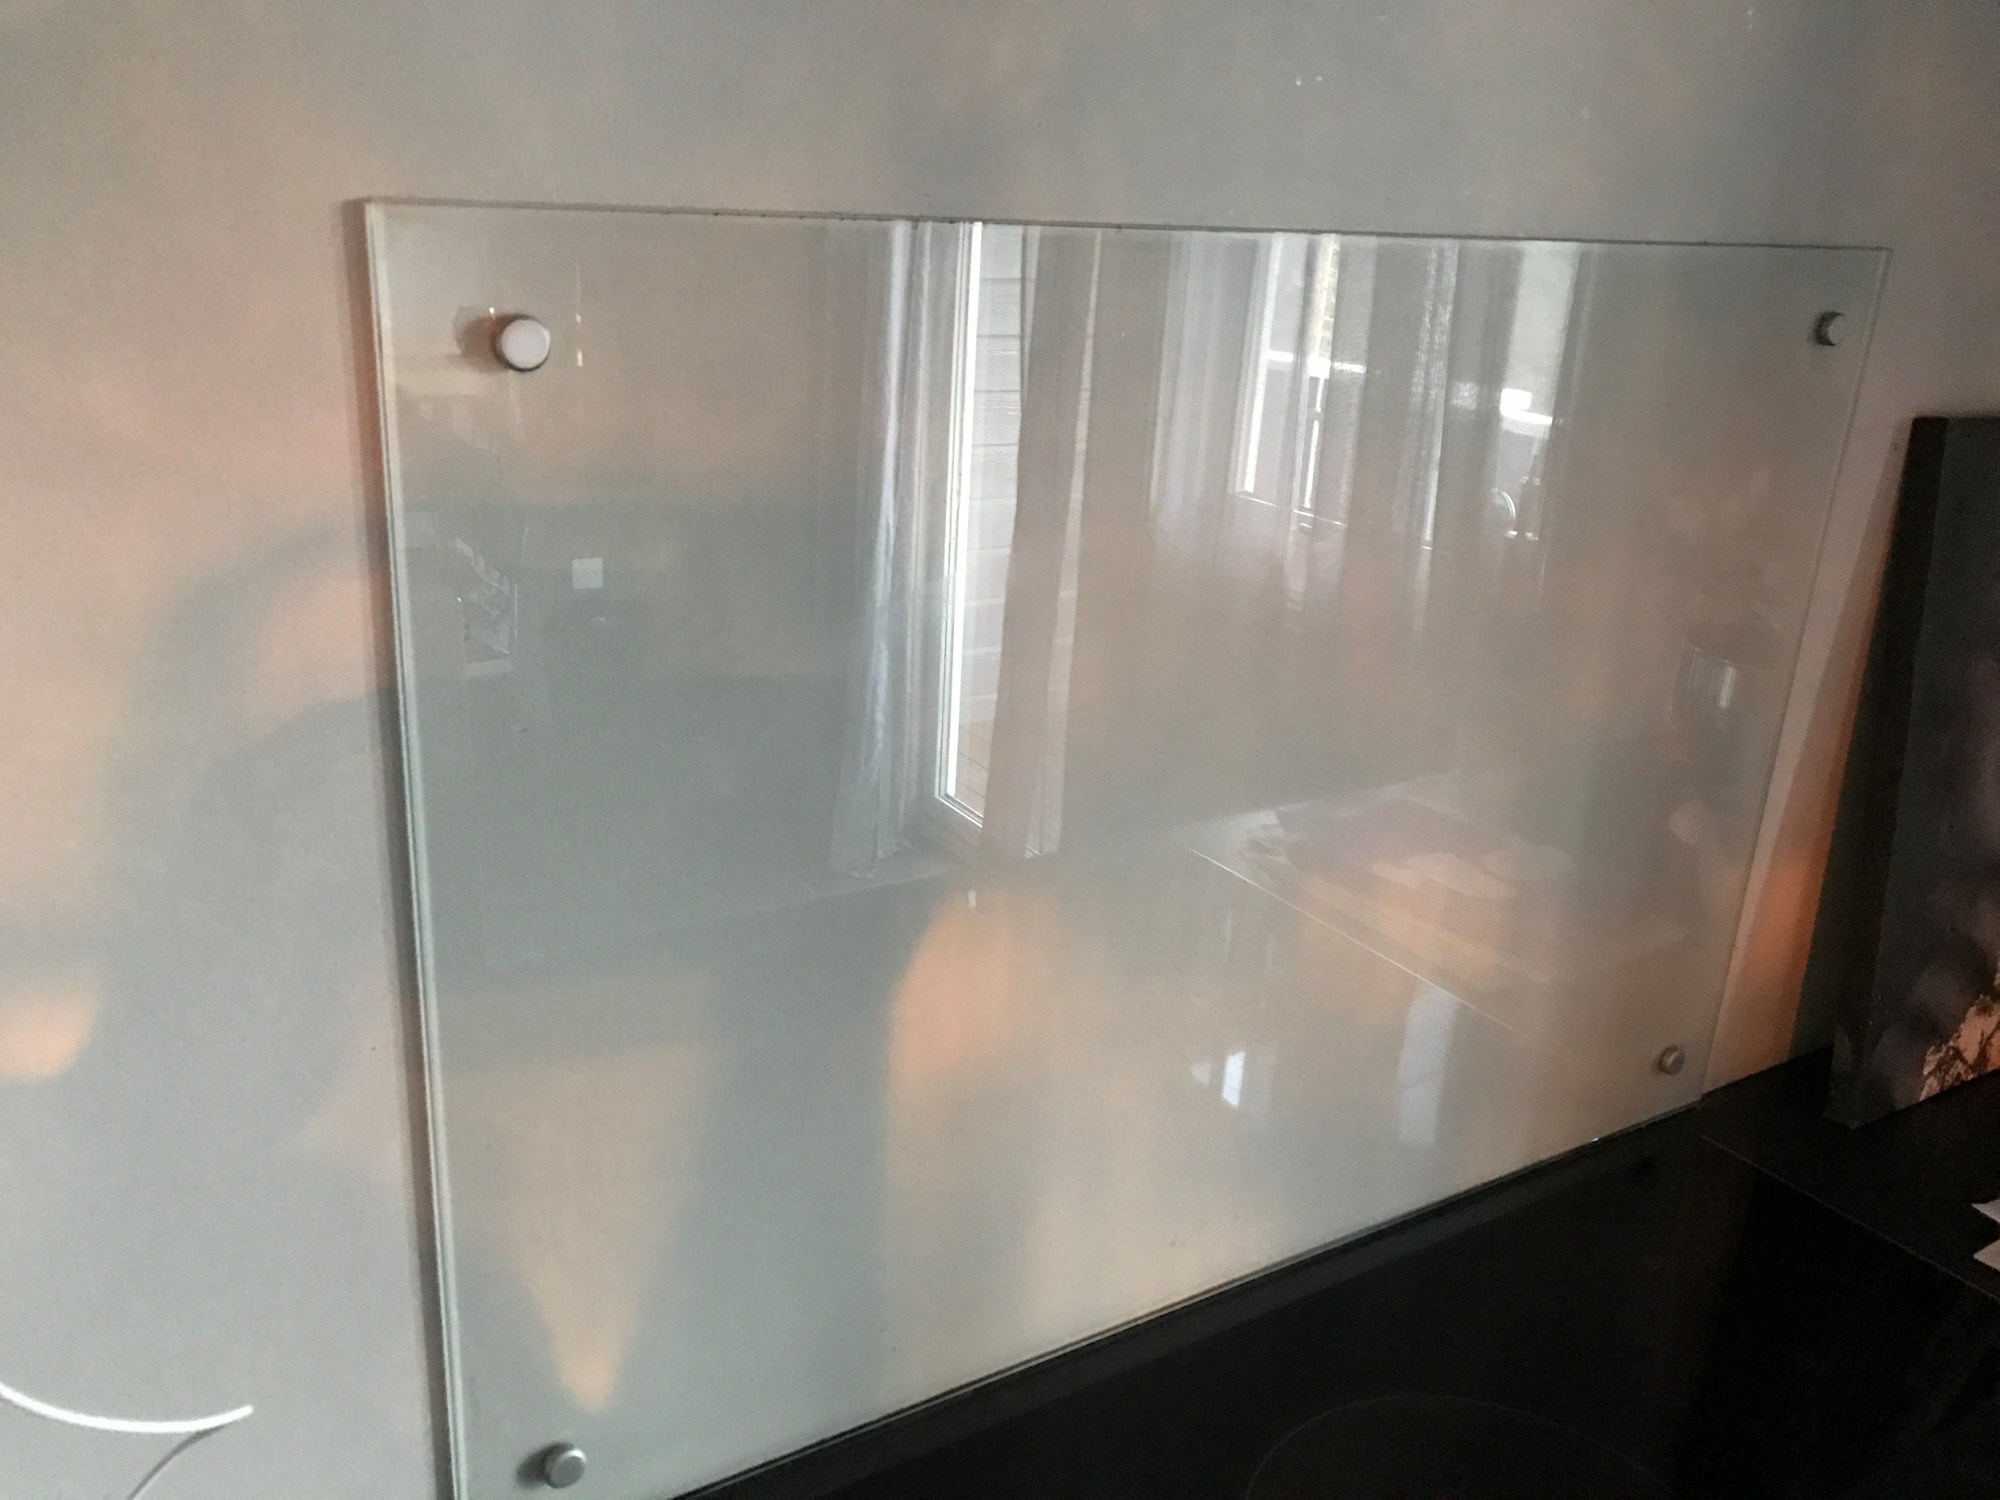 Feste glassplate til tapet over vask - 19D8325D-33A2-46DE-AACD-7581FC4722B2.jpeg - V90